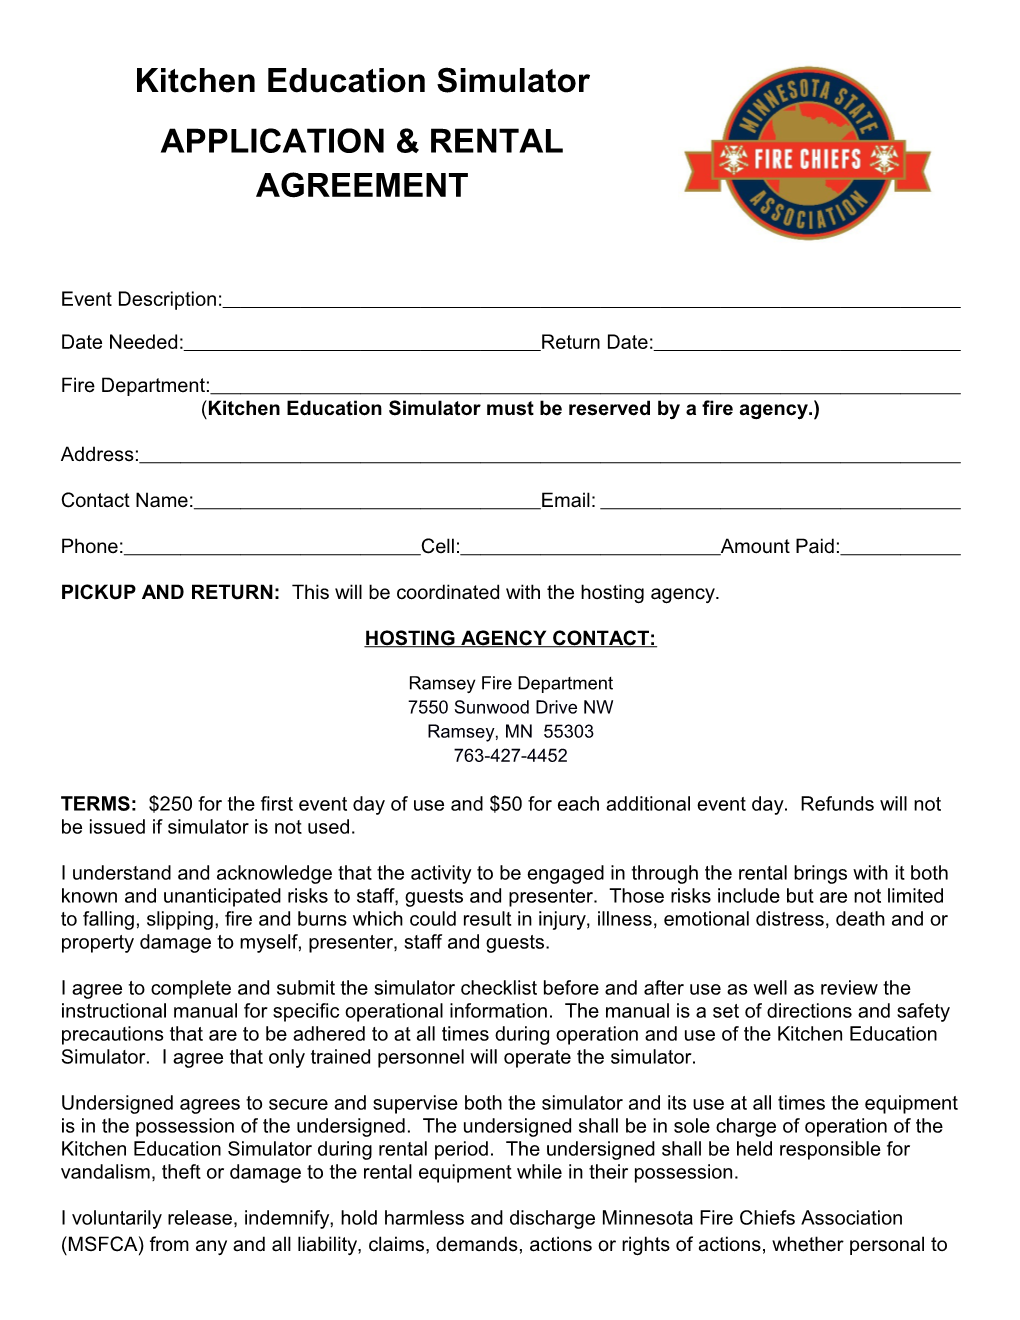 Application & Rental Agreement